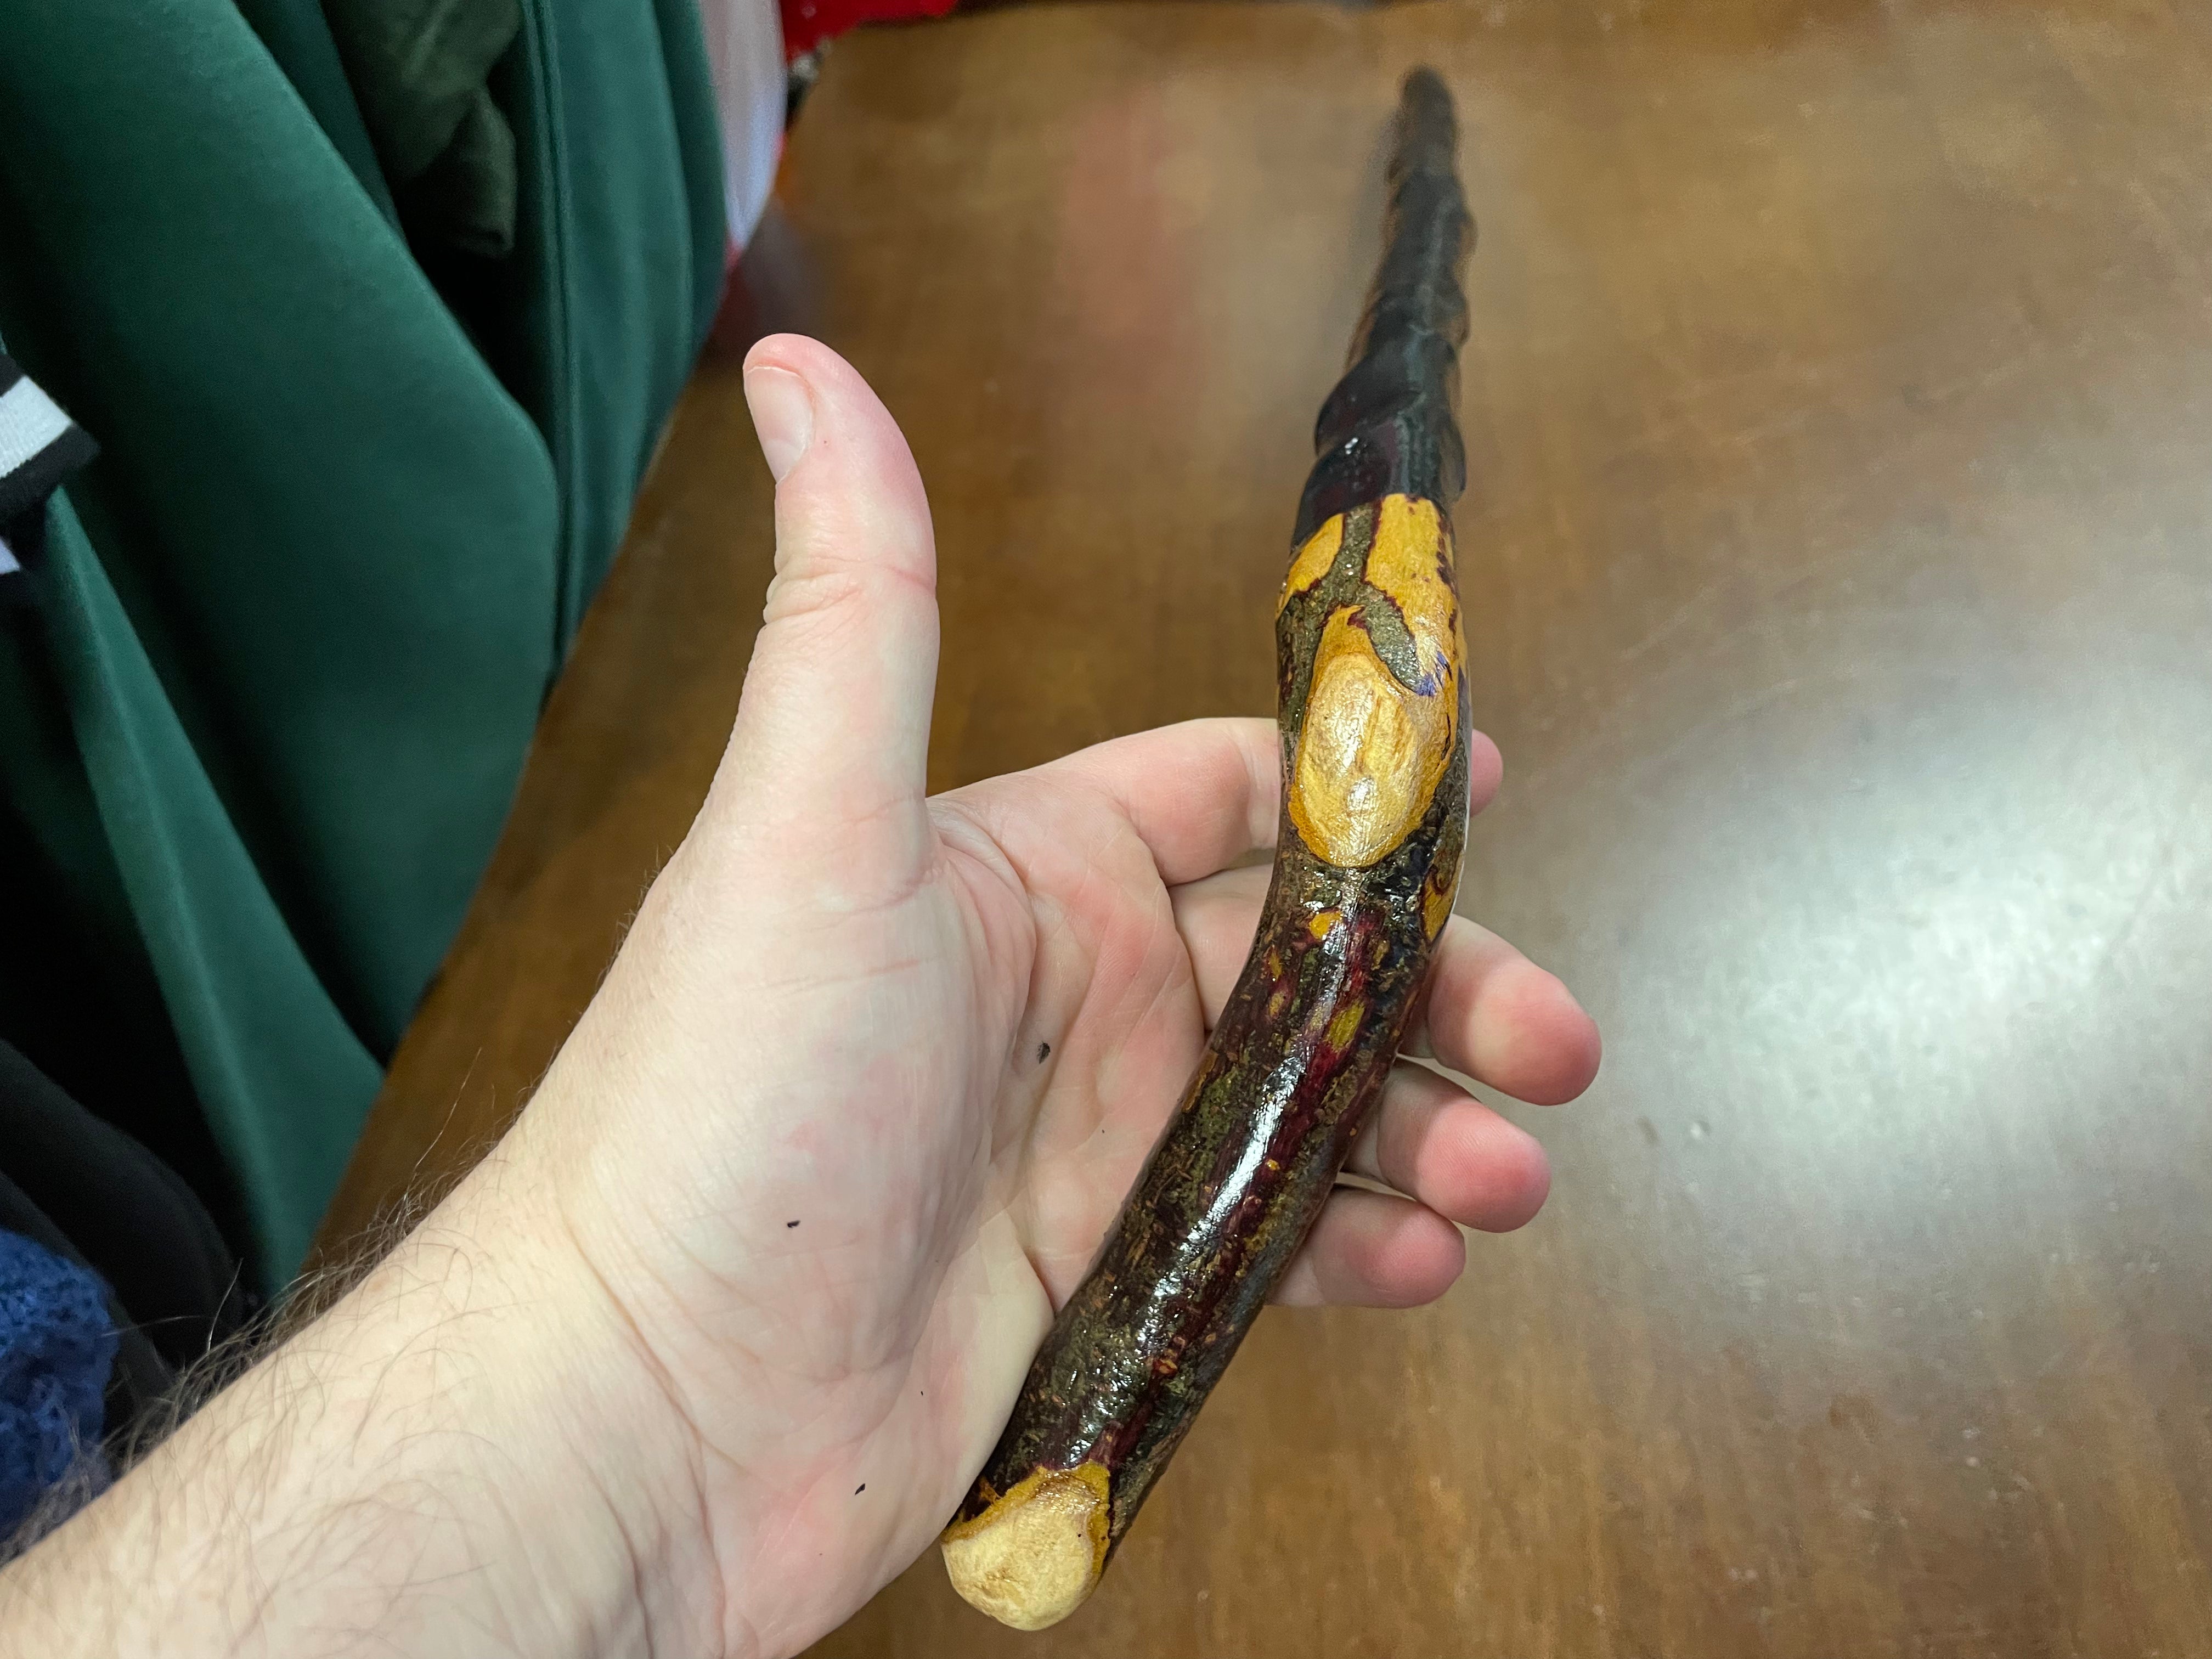 Blackthorn Walking Stick 34 inch  - Handmade in Ireland